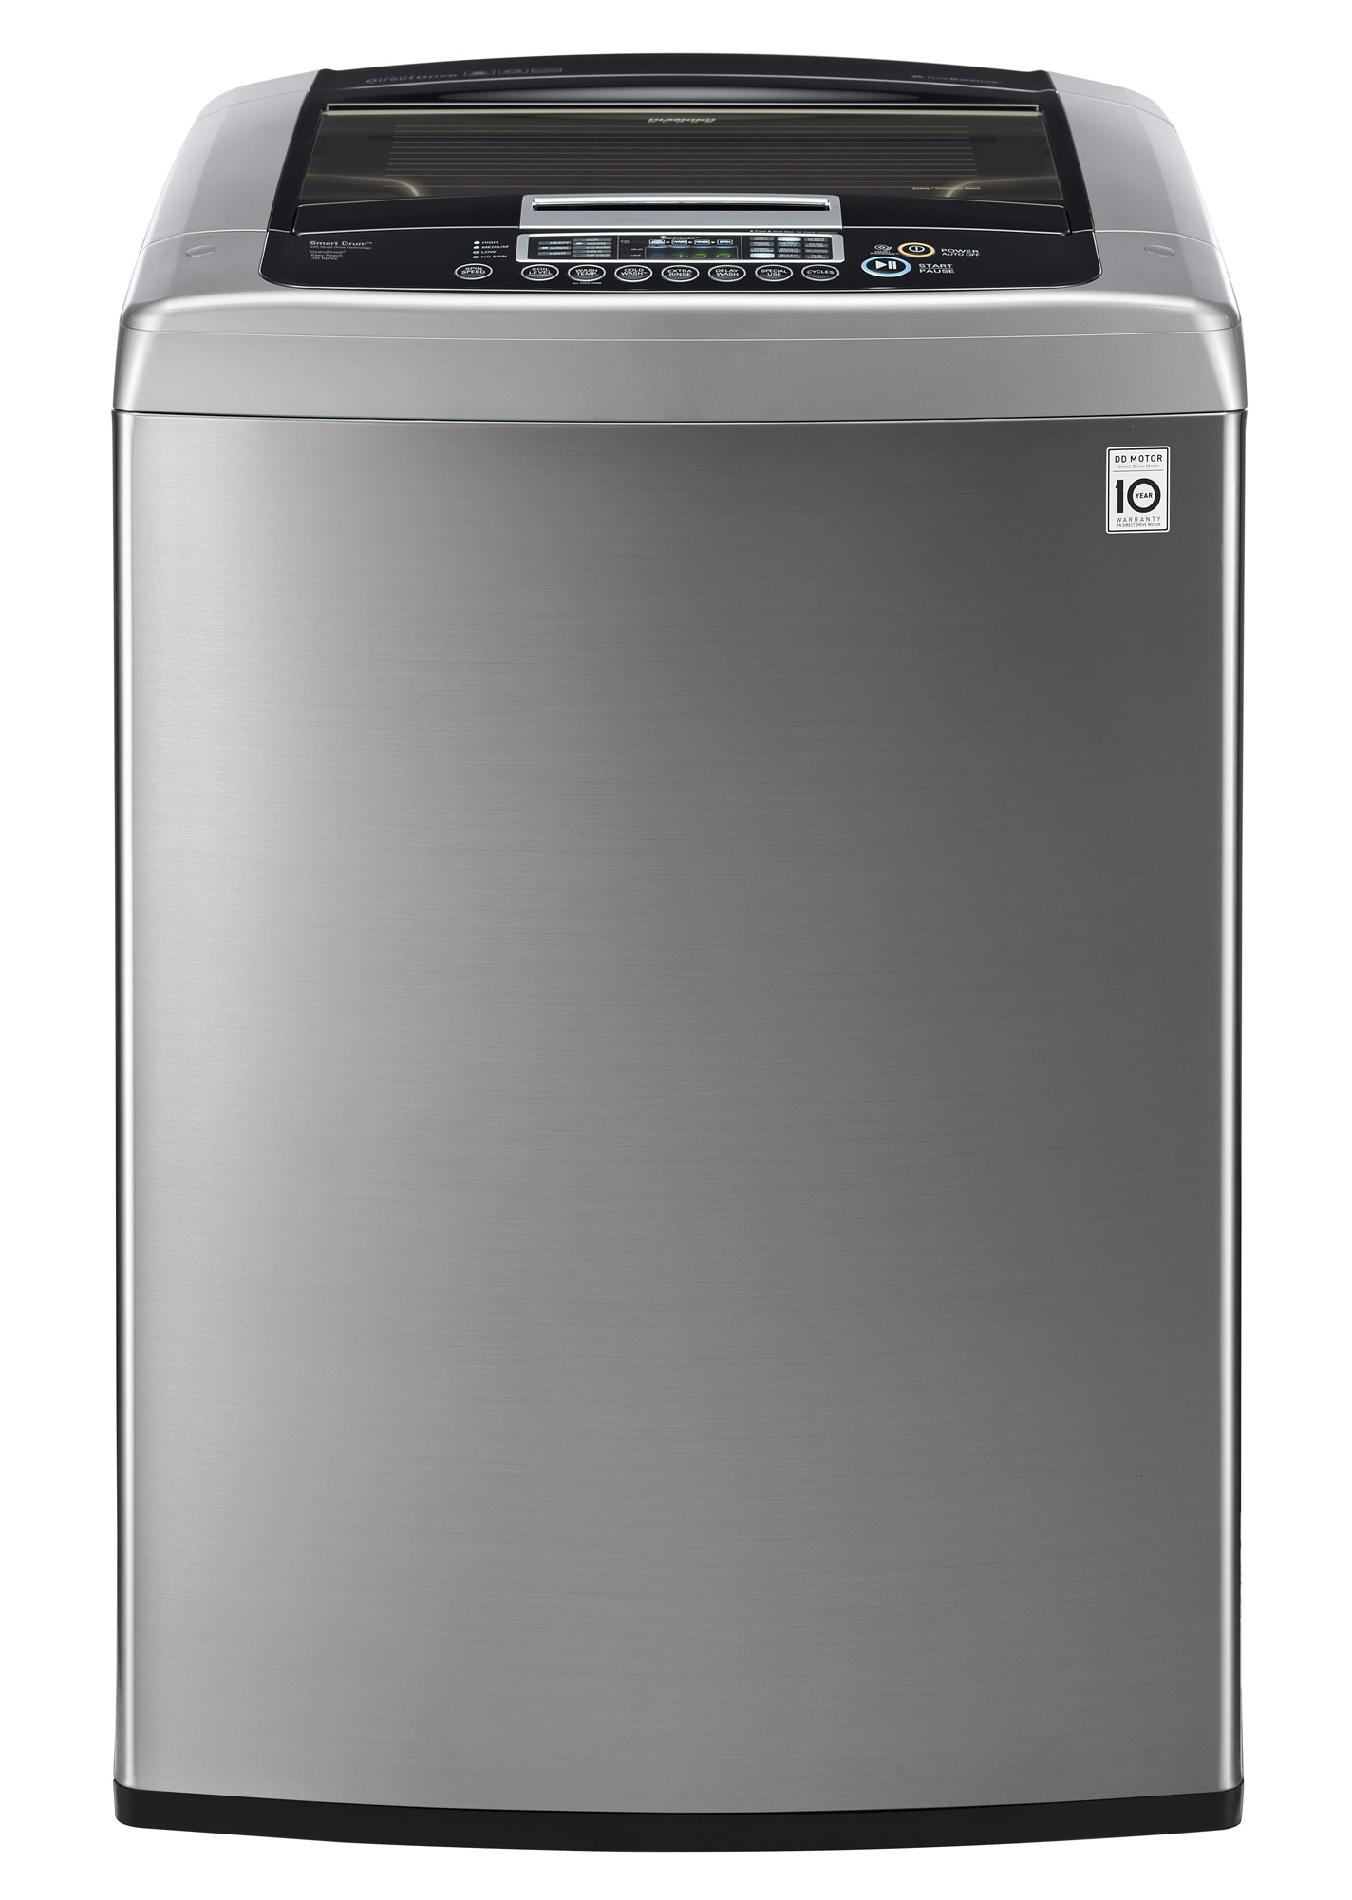 LG 4.5 cu. ft. High-Efficiency Top-Load Washer - Graphite Steel Metallic 4.0 cu.ft. - 4.5 cu.ft.